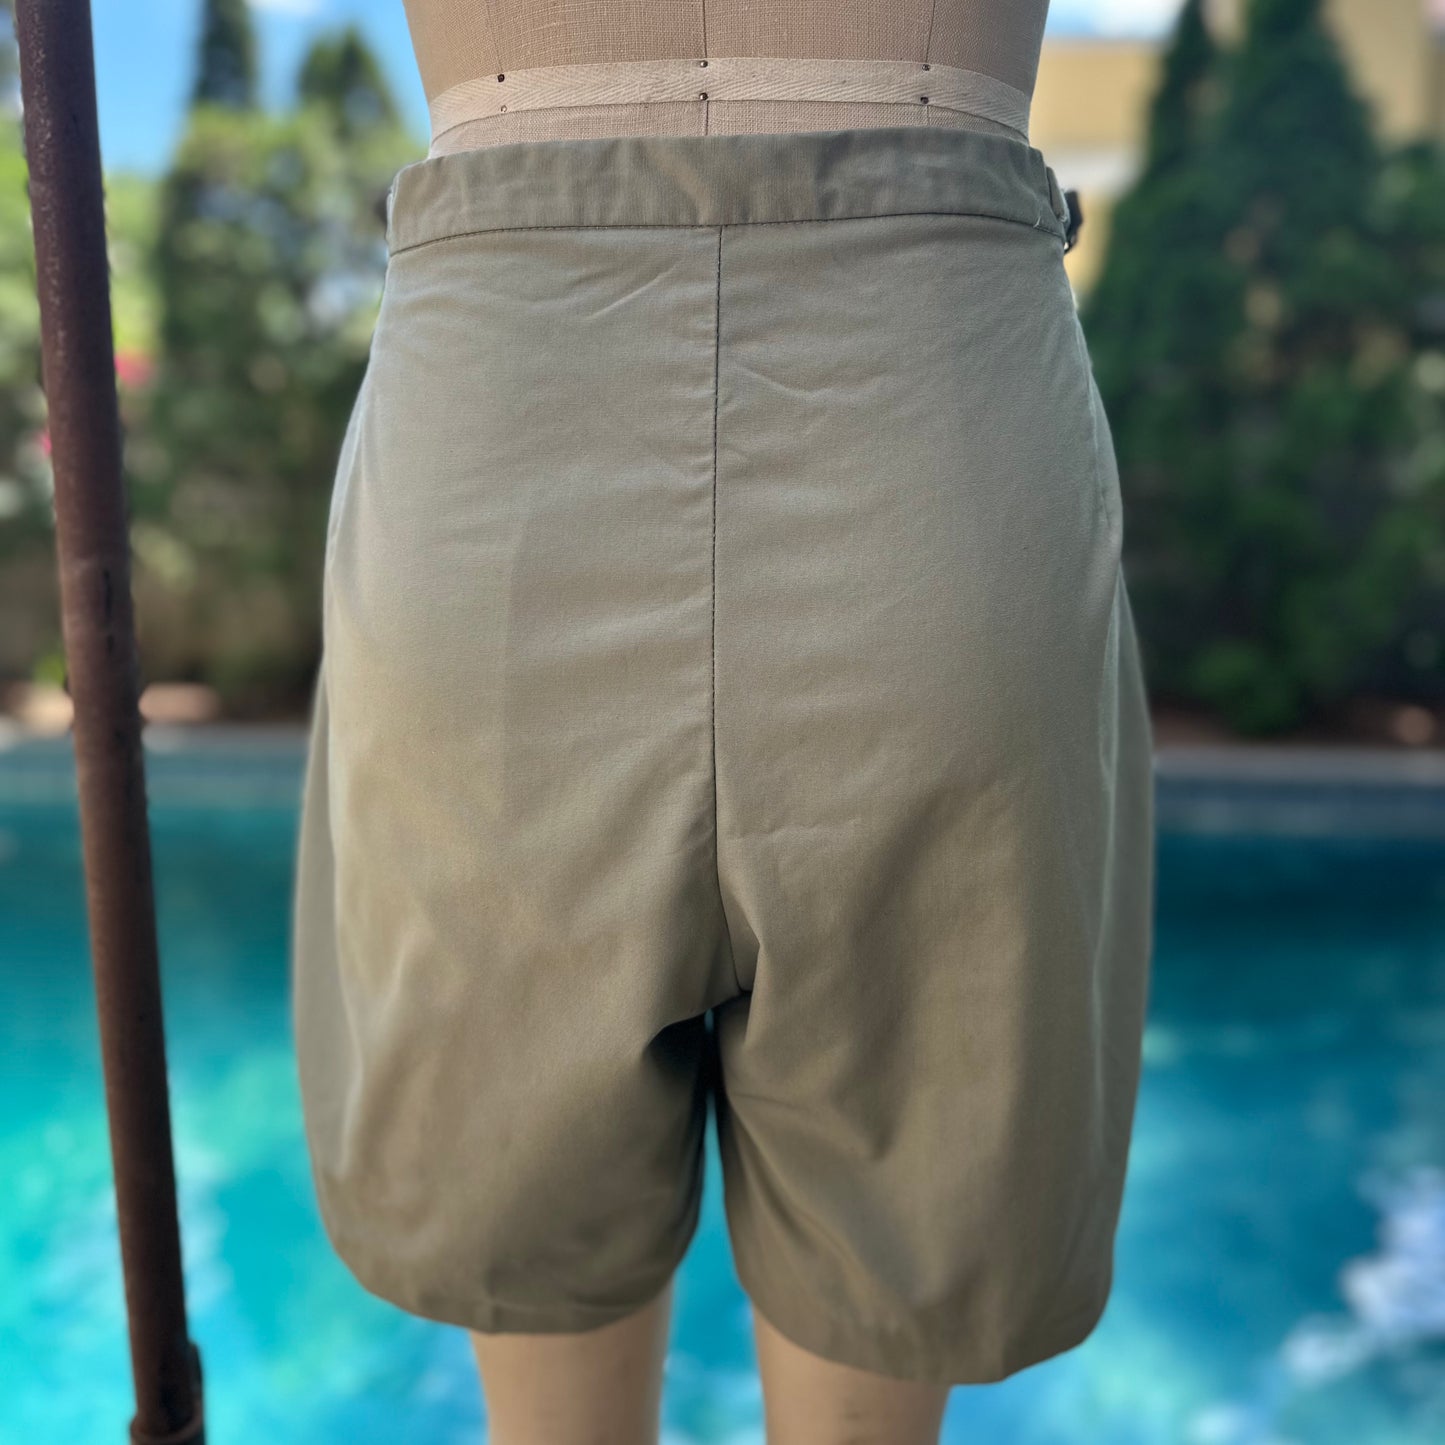 1960s Men’s Khaki Shorts, McGregor Swim ‘n Play Size Medium, New Old Stock with Tag